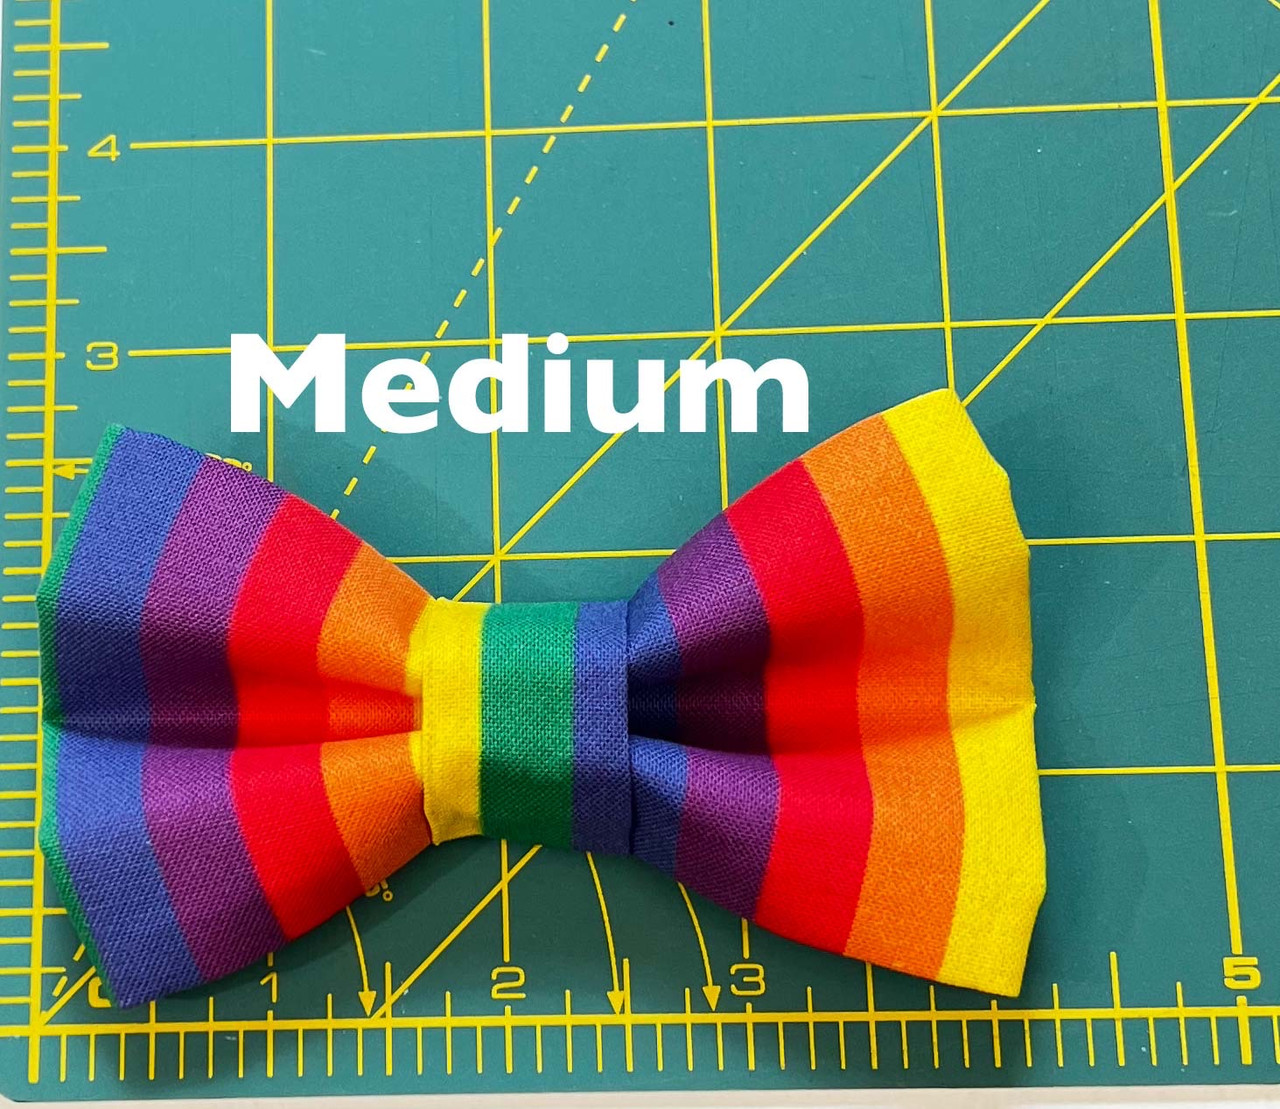 Pride Rainbow Stripes Bow Tie